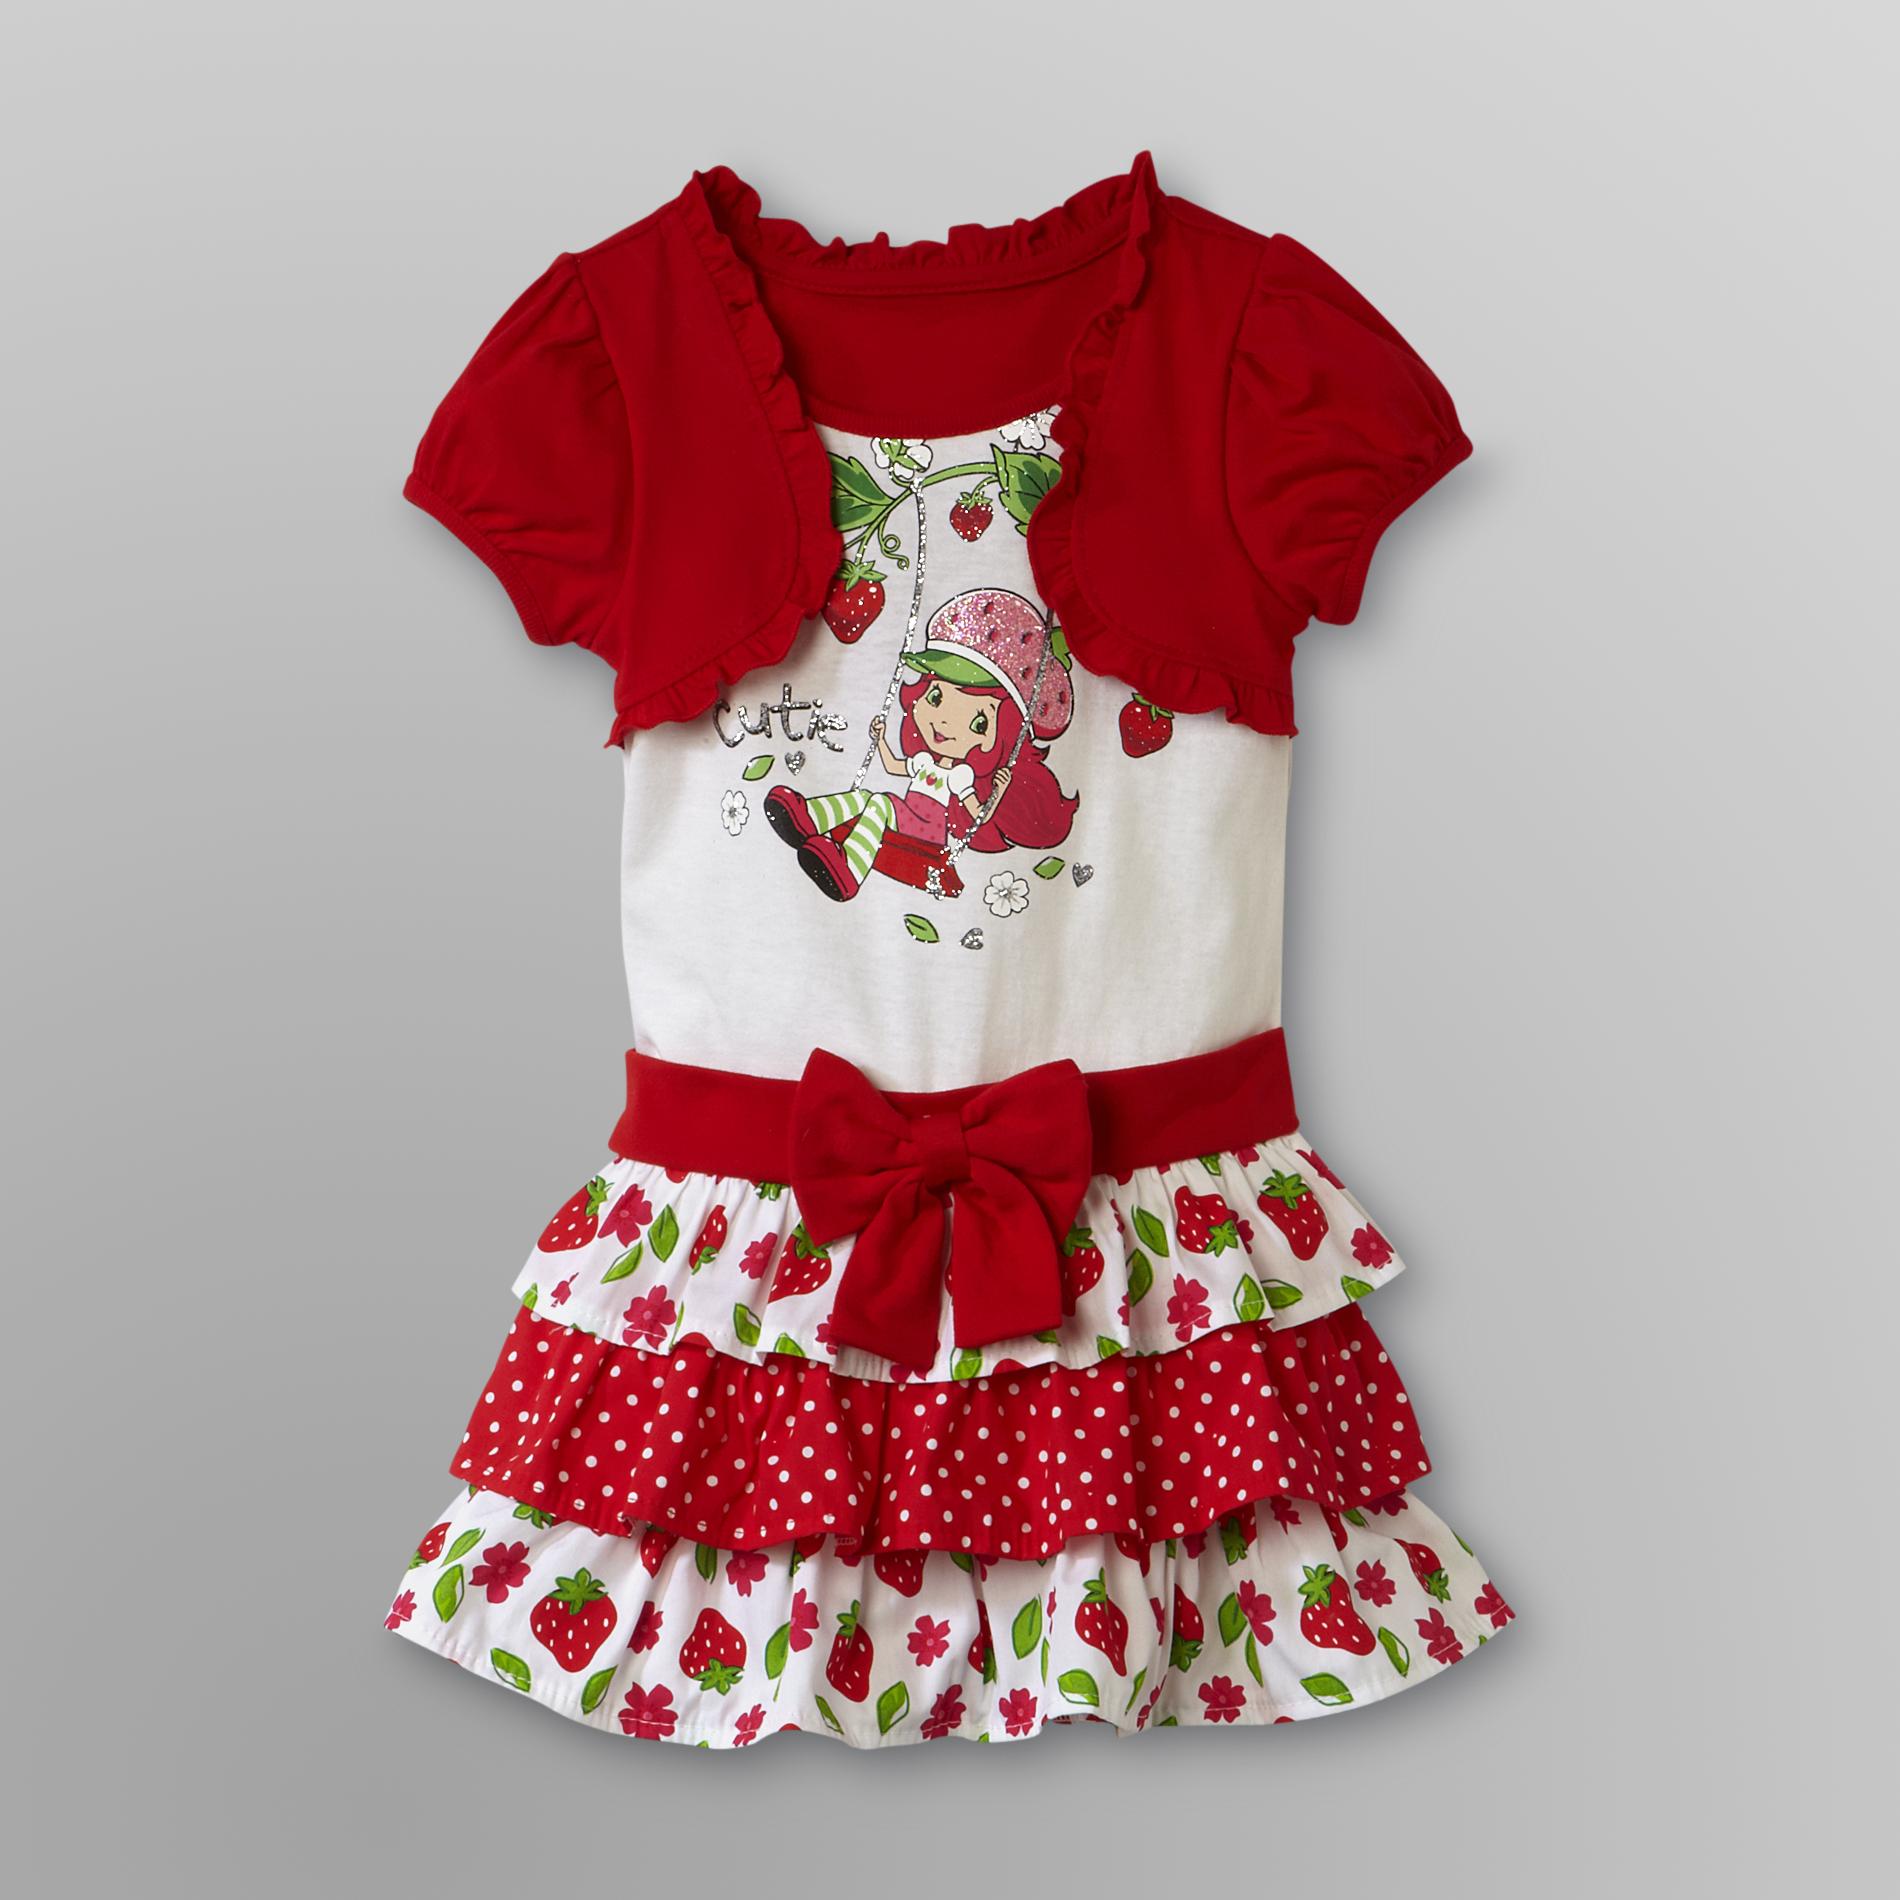 Strawberry Shortcake Infant & Toddler Girl's Tiered Dress